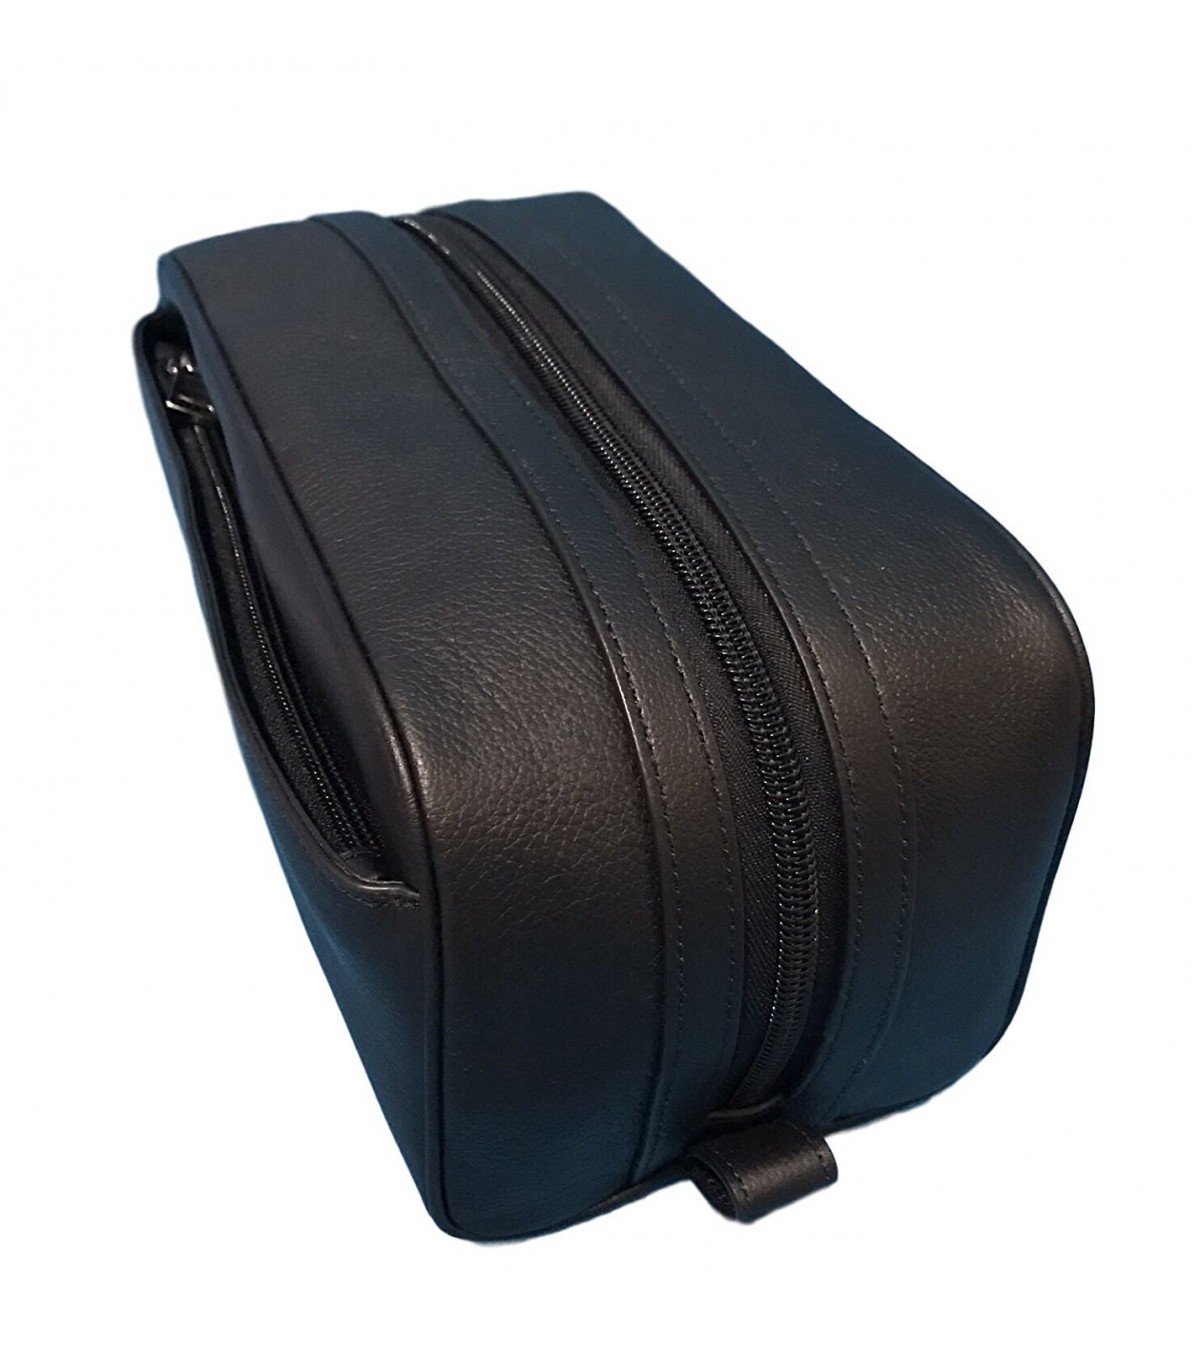 COACH Leather Travel Dopp Kit Toiletries Bag in Black 58542